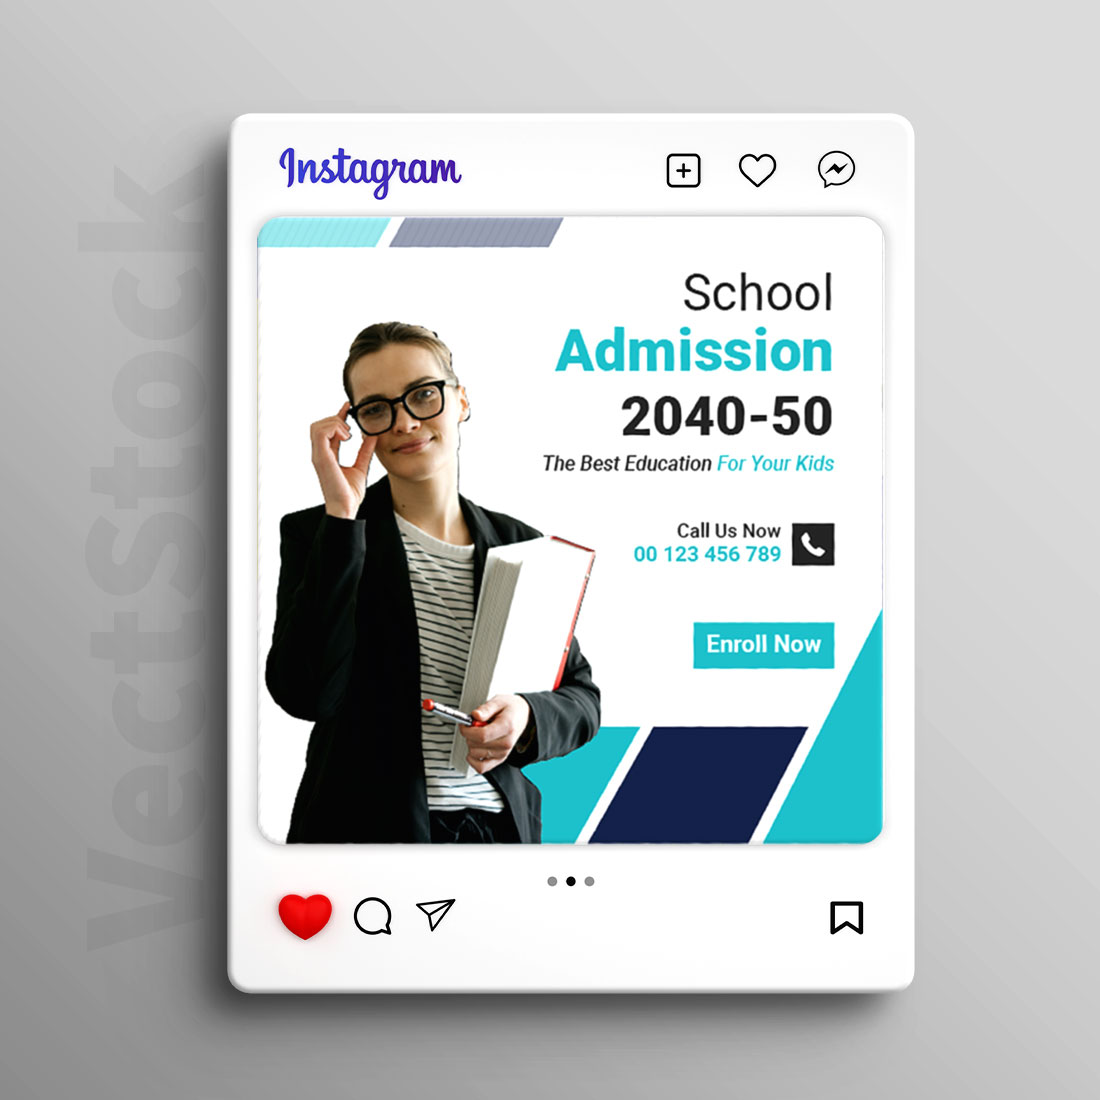 School admission sale social media Instagram post cover image.